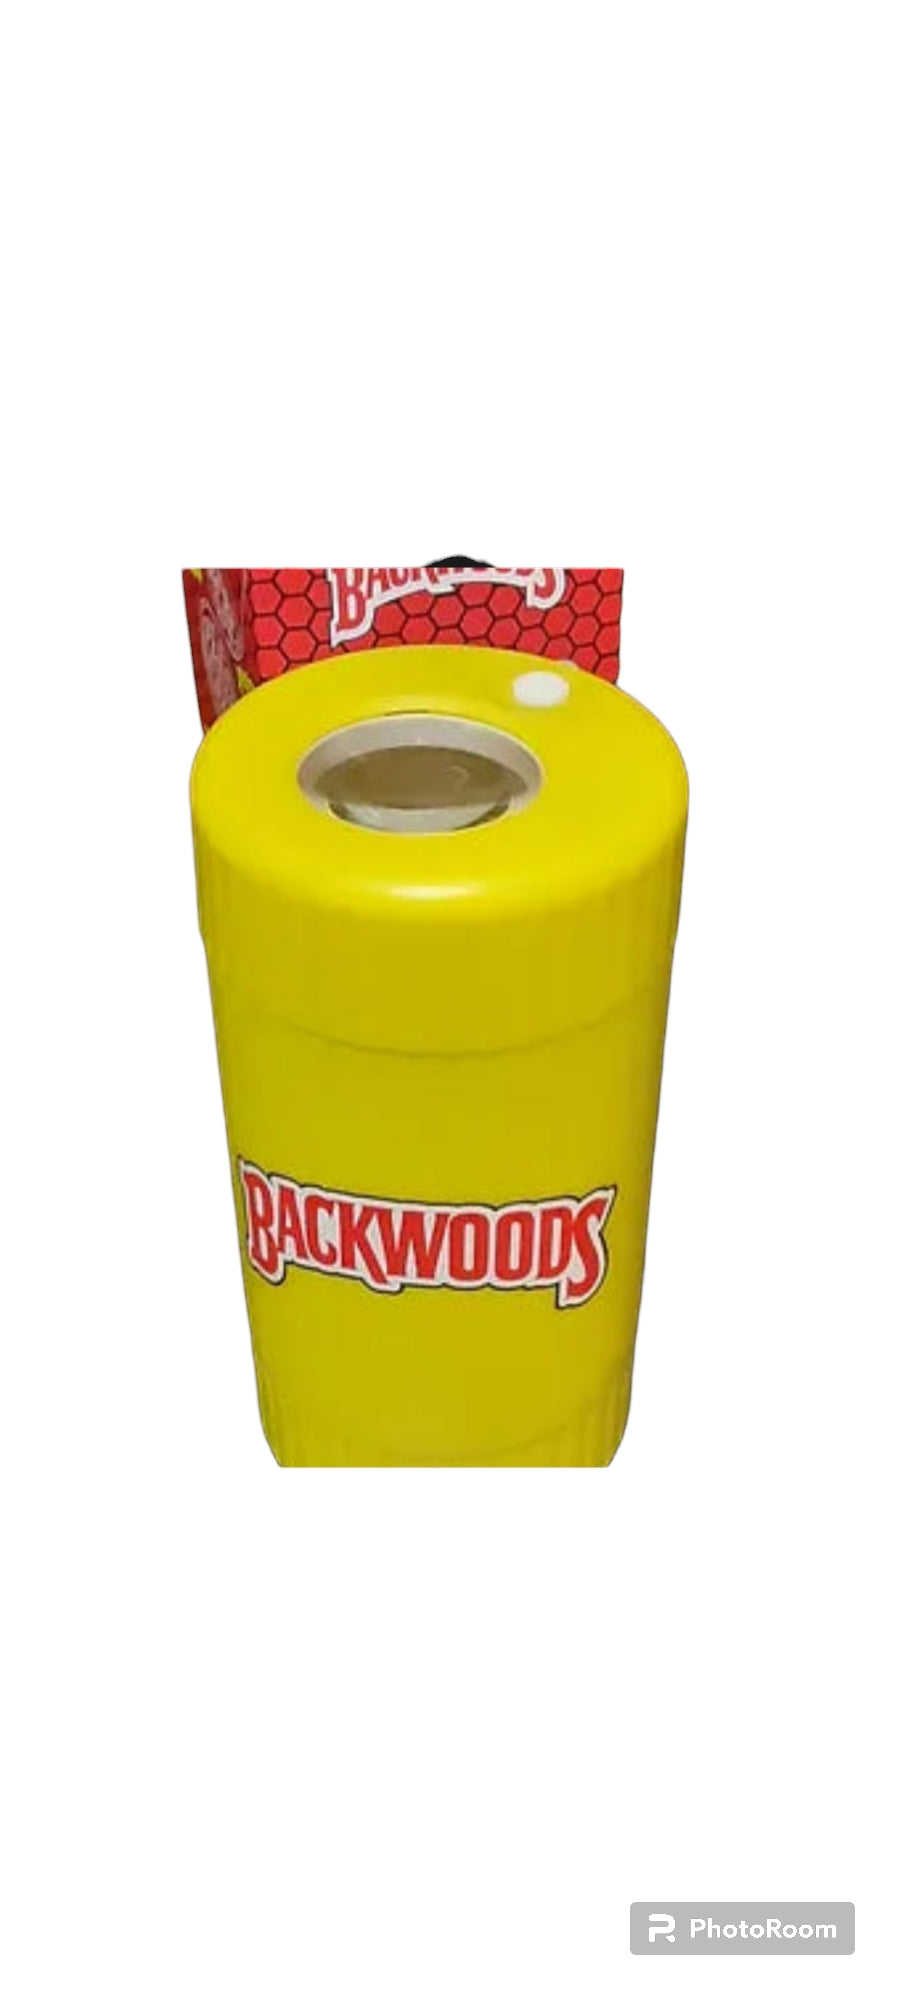 Backwoods 4 in 1 Utility Jar